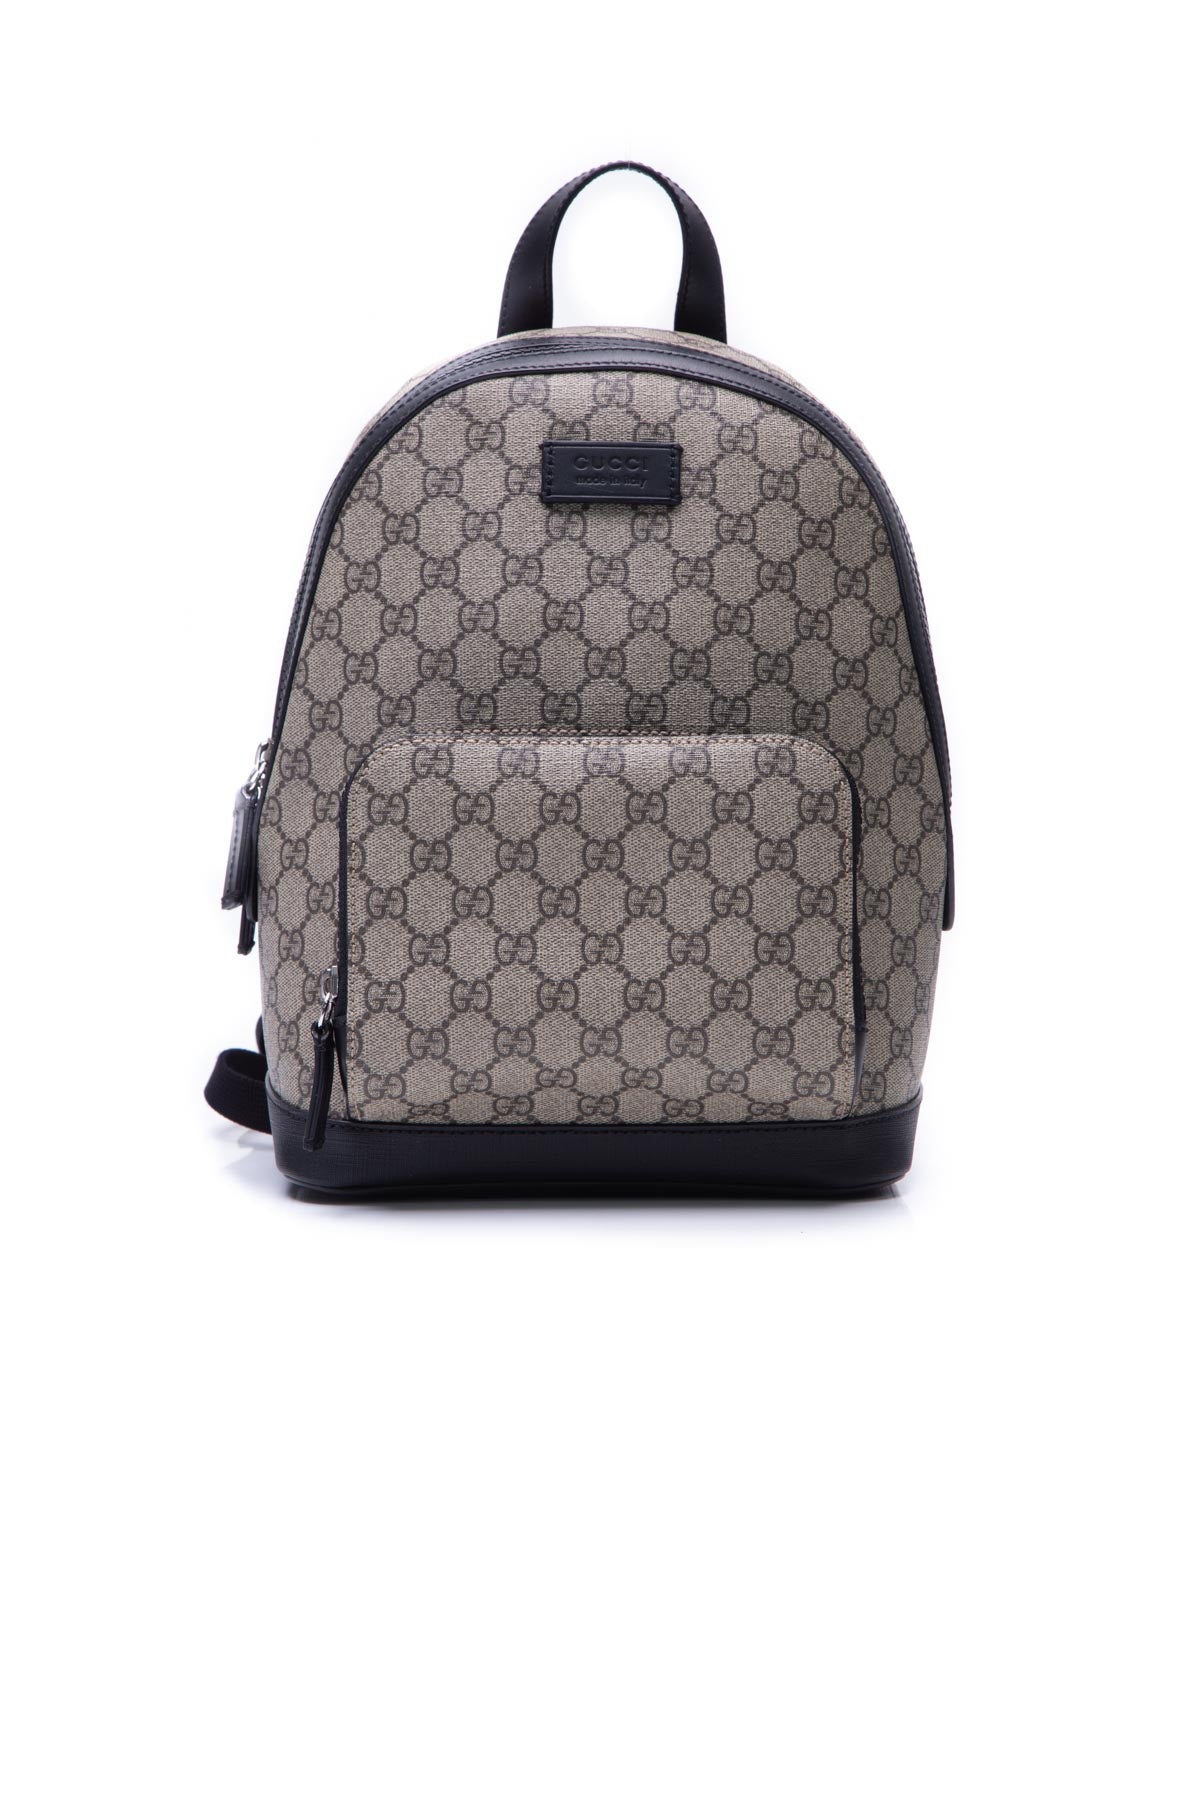 AUTHENTIC Gucci GG Supreme Monogram Large Eden Day Backpack Black